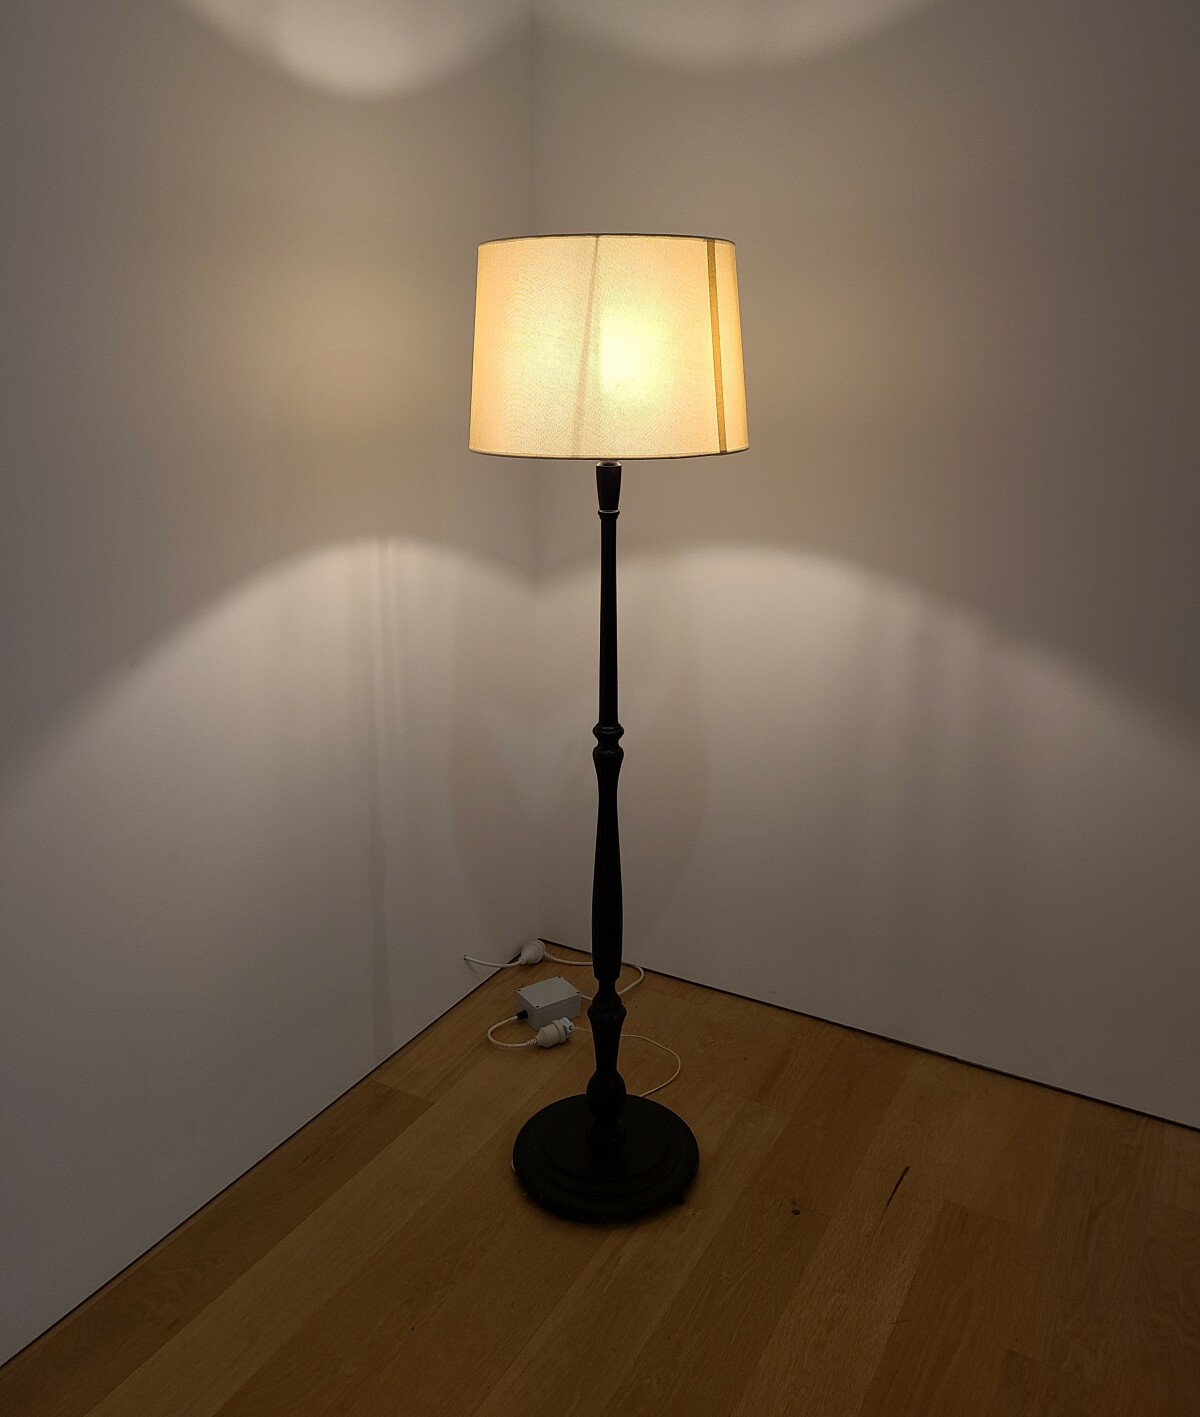 Martin Creed lamp cropped